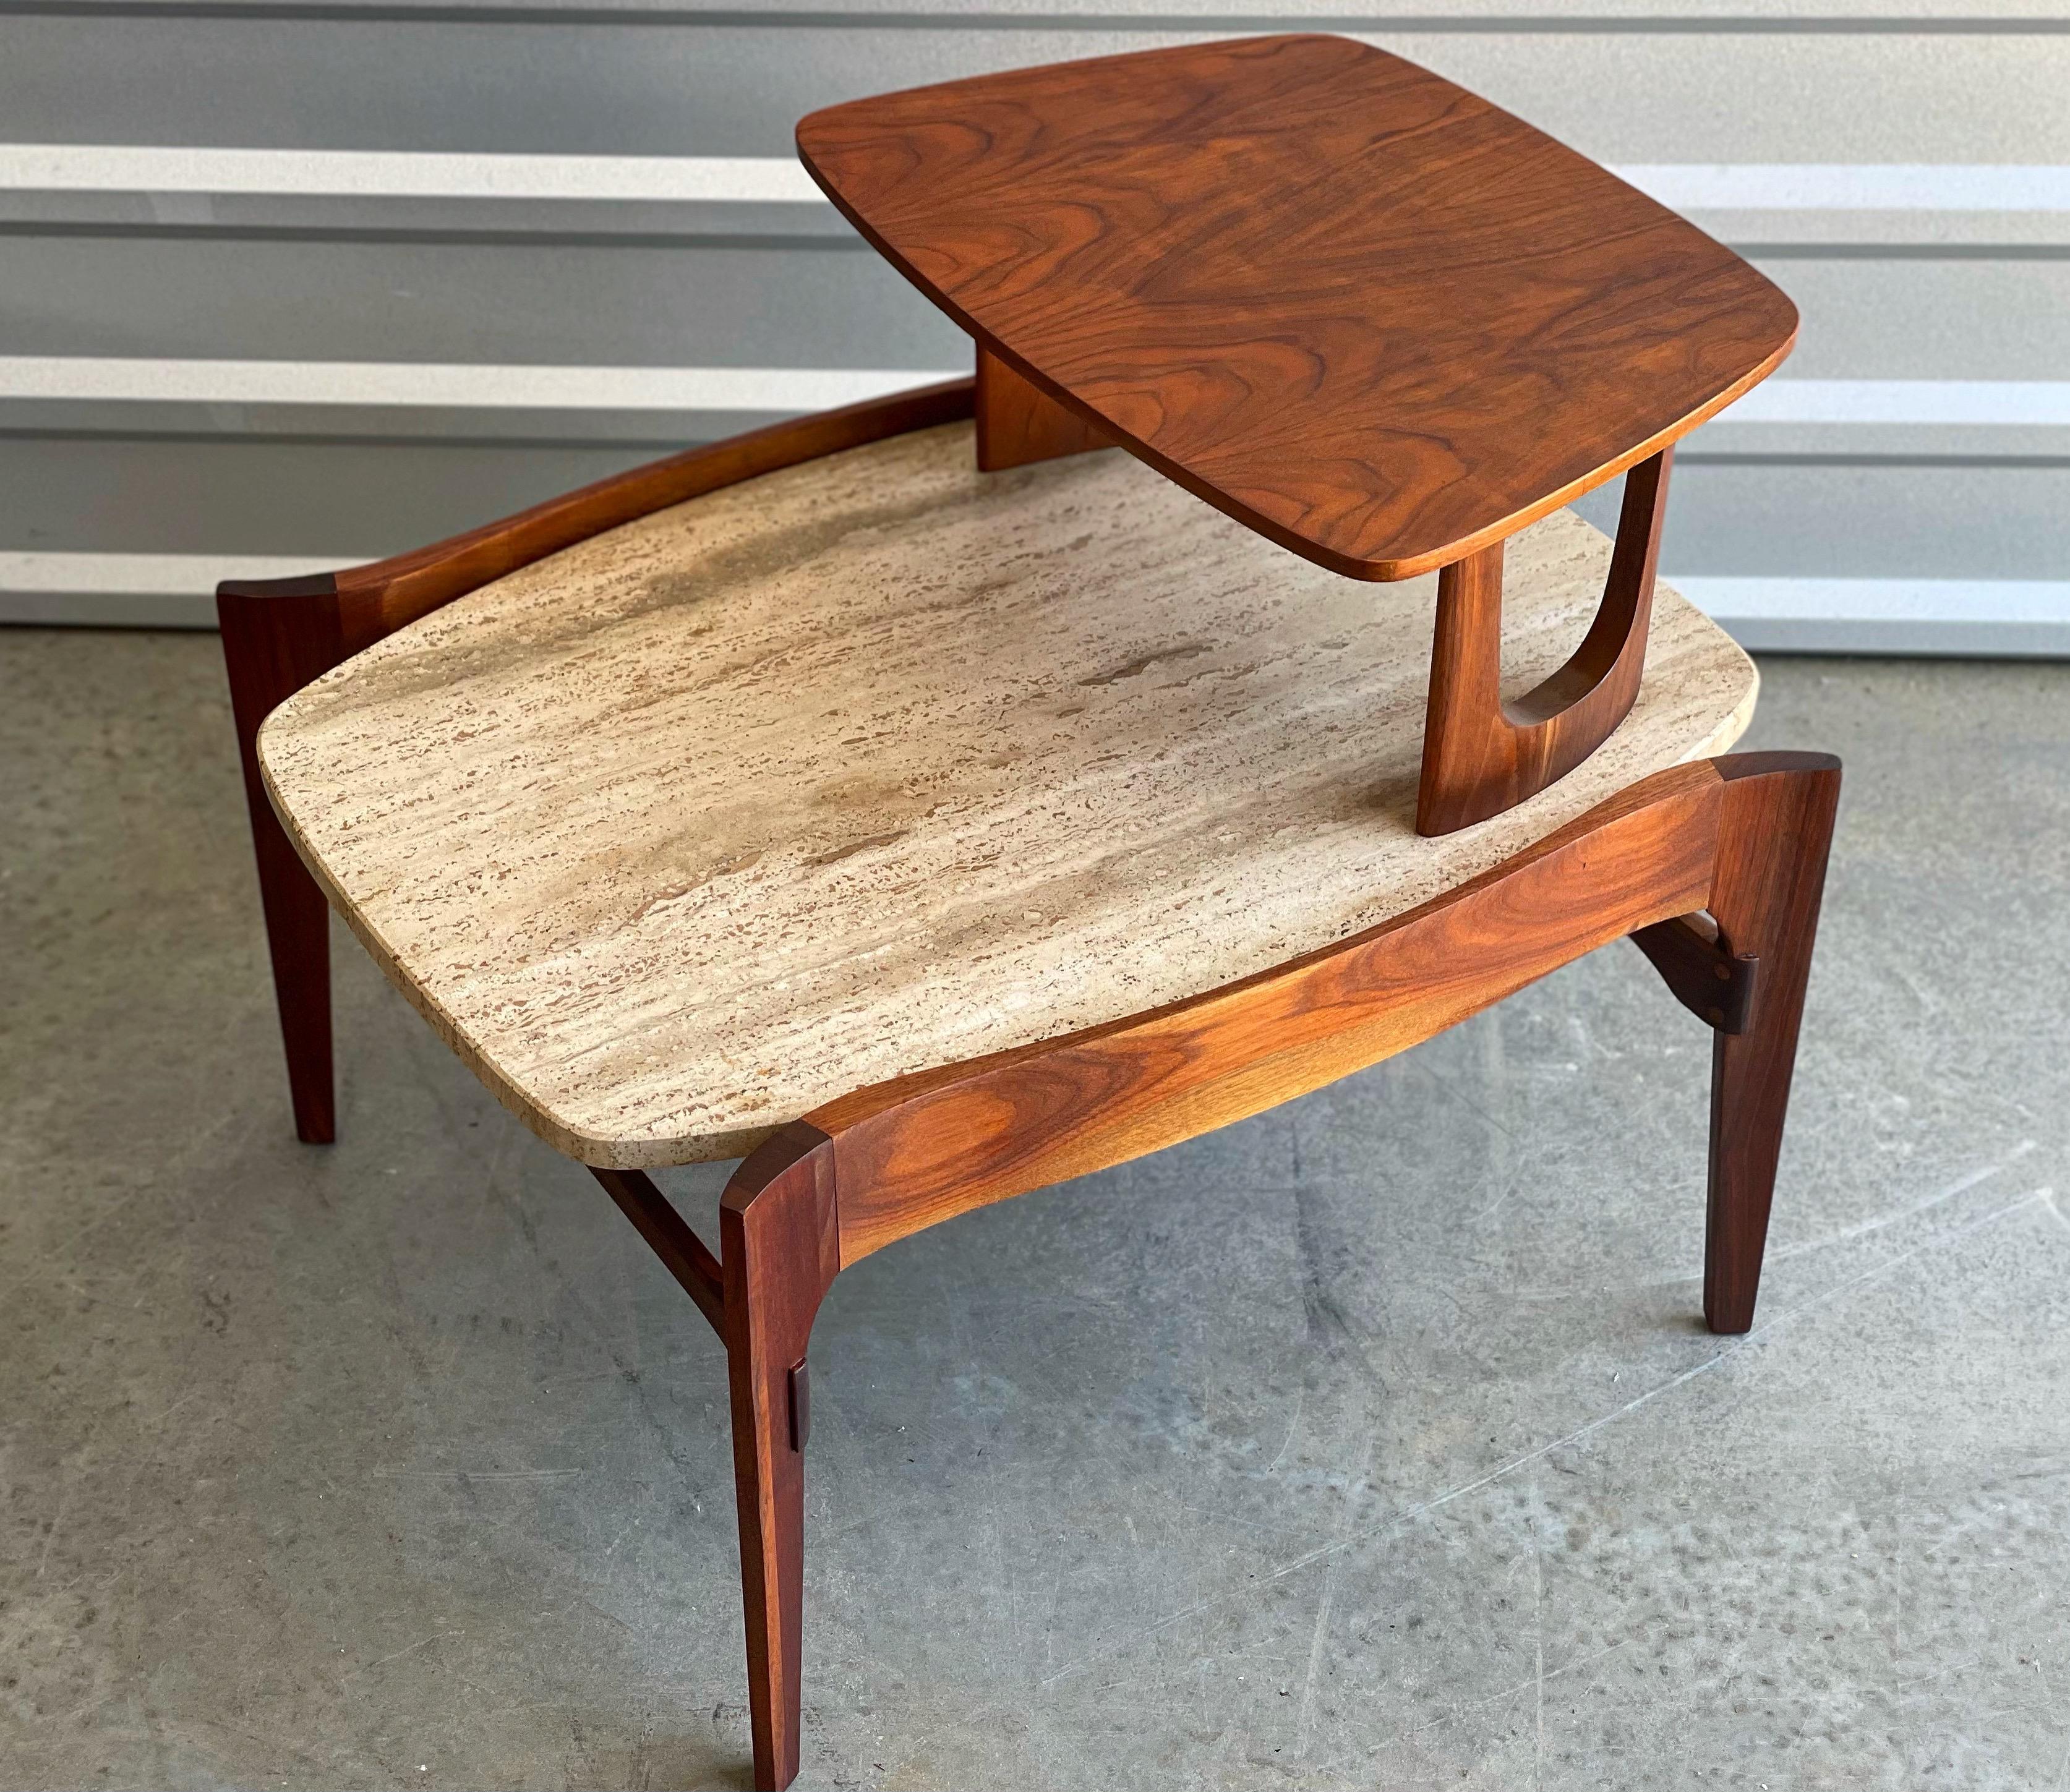 gordon's fine furniture side table